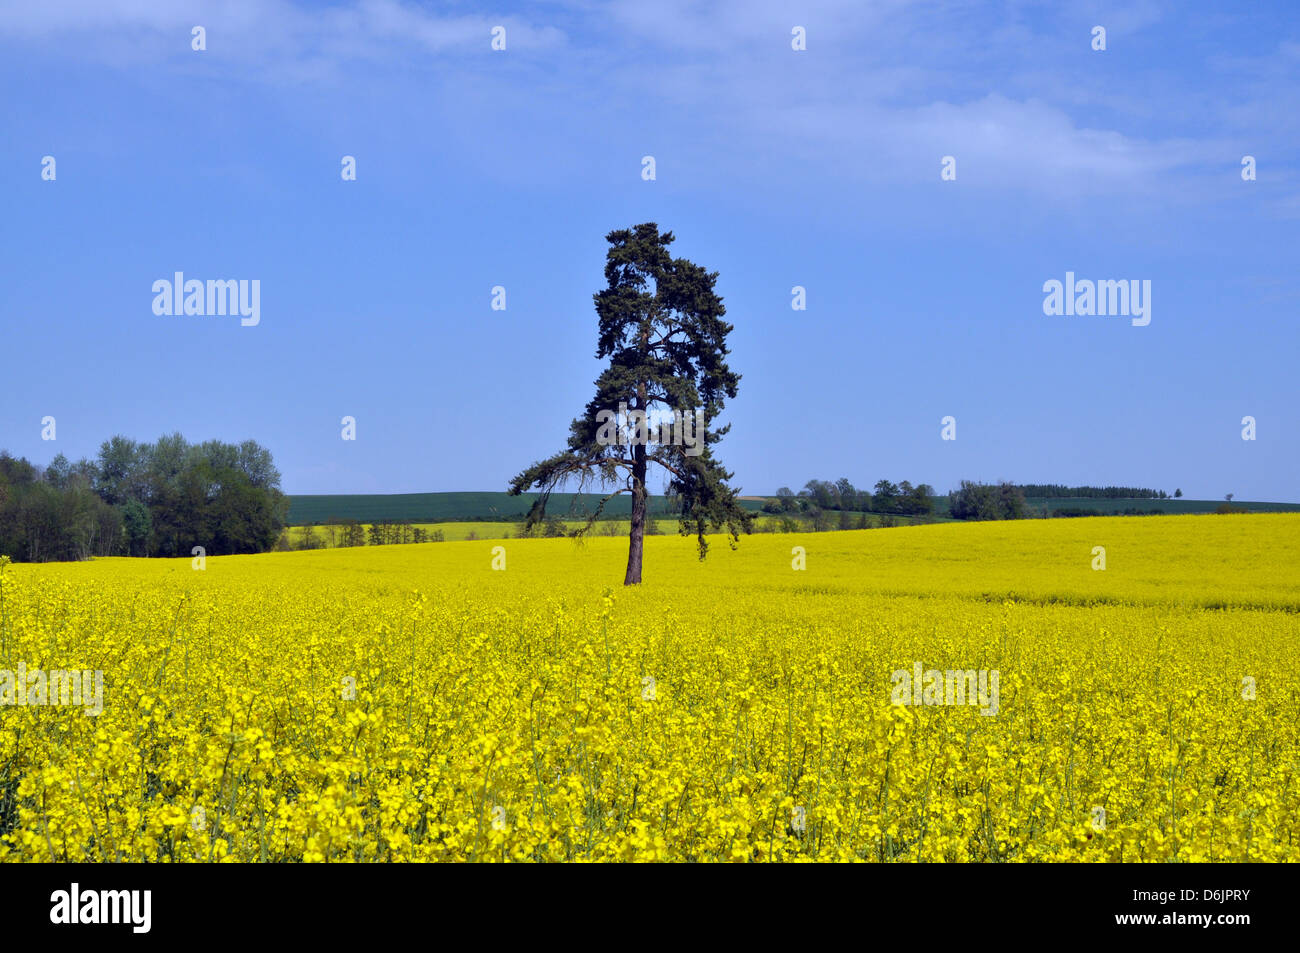 Gelbes Feld gegen einen blauen Himmel, Rapsöl Ernte, Île-de-France-Region in Nord-Zentral-Frankreich. Stockfoto